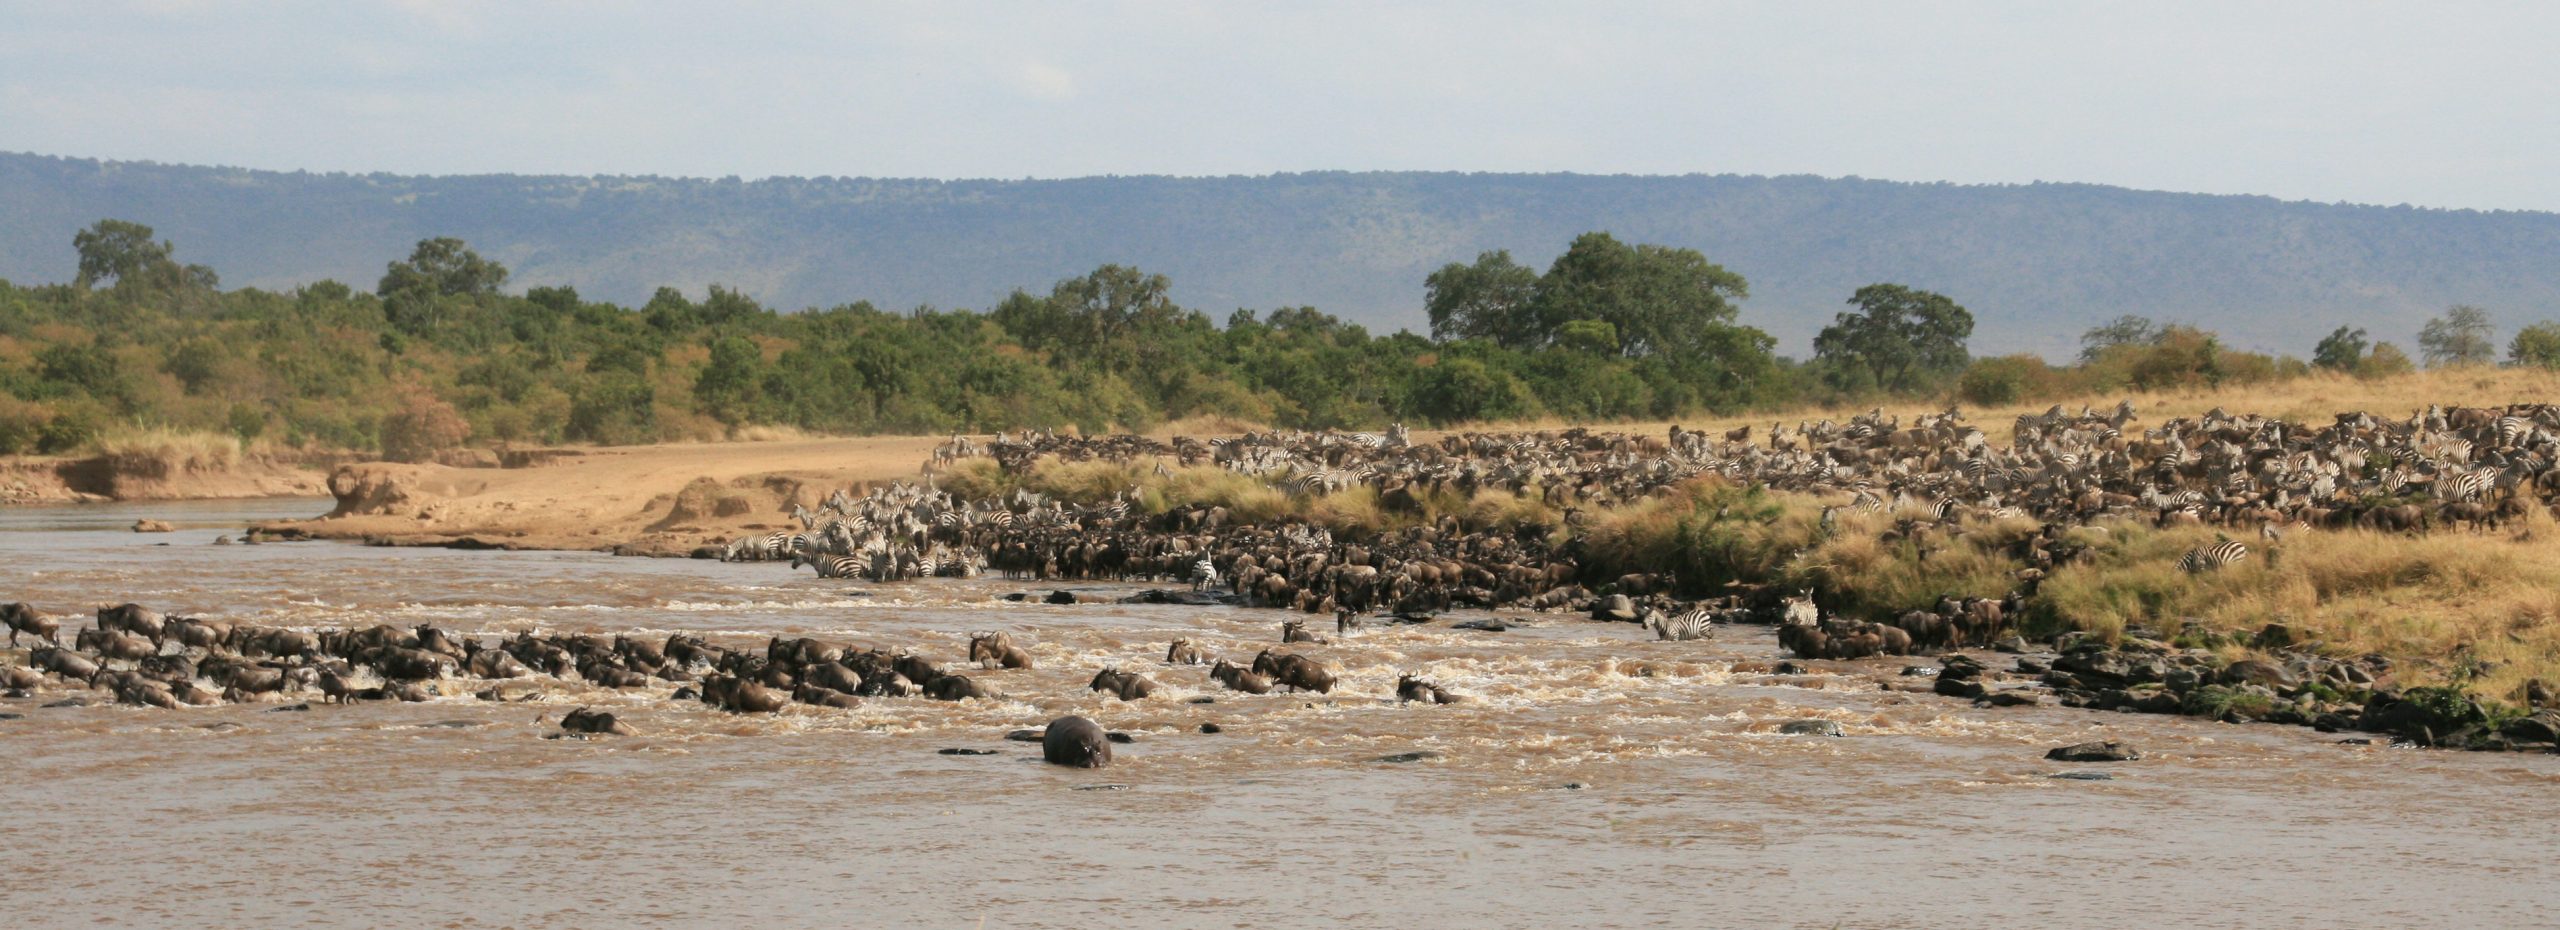 Tanzania Travel Serengeti travelandhome migration